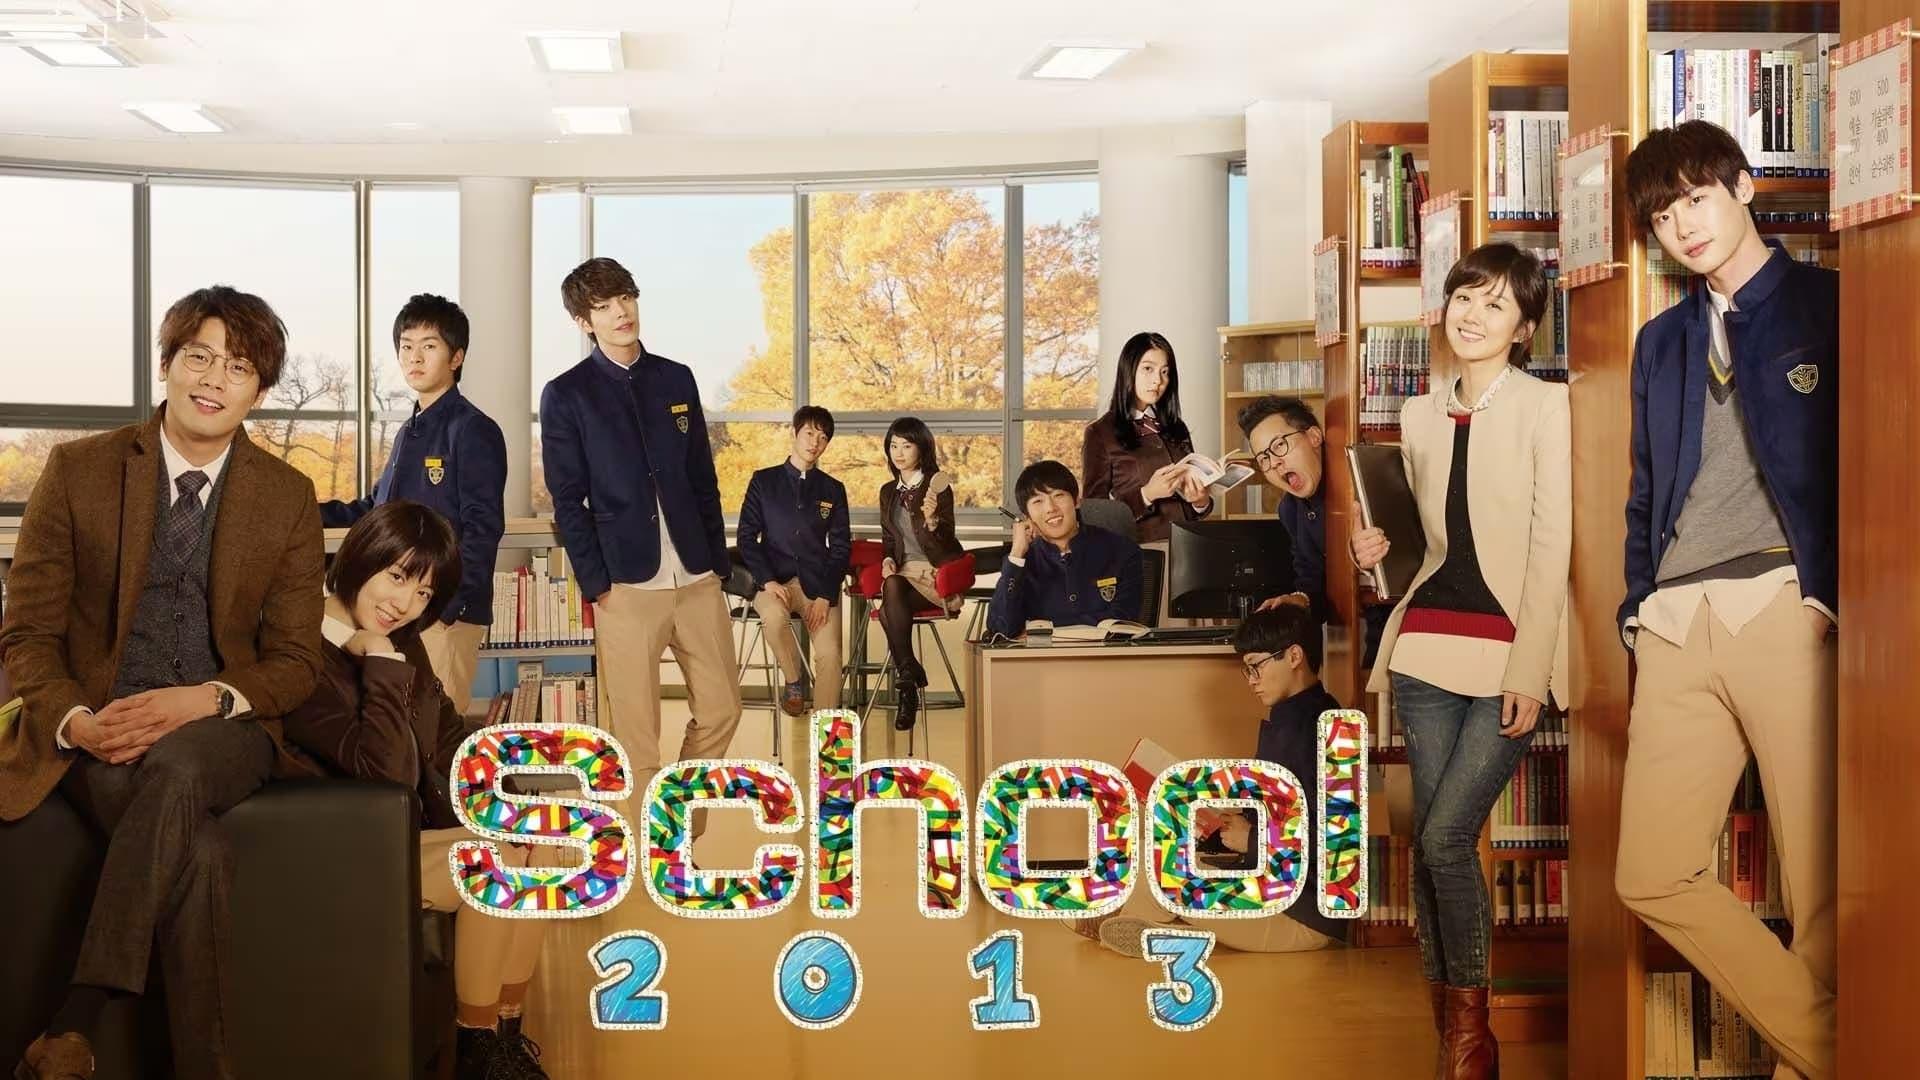 School 2013 backdrop